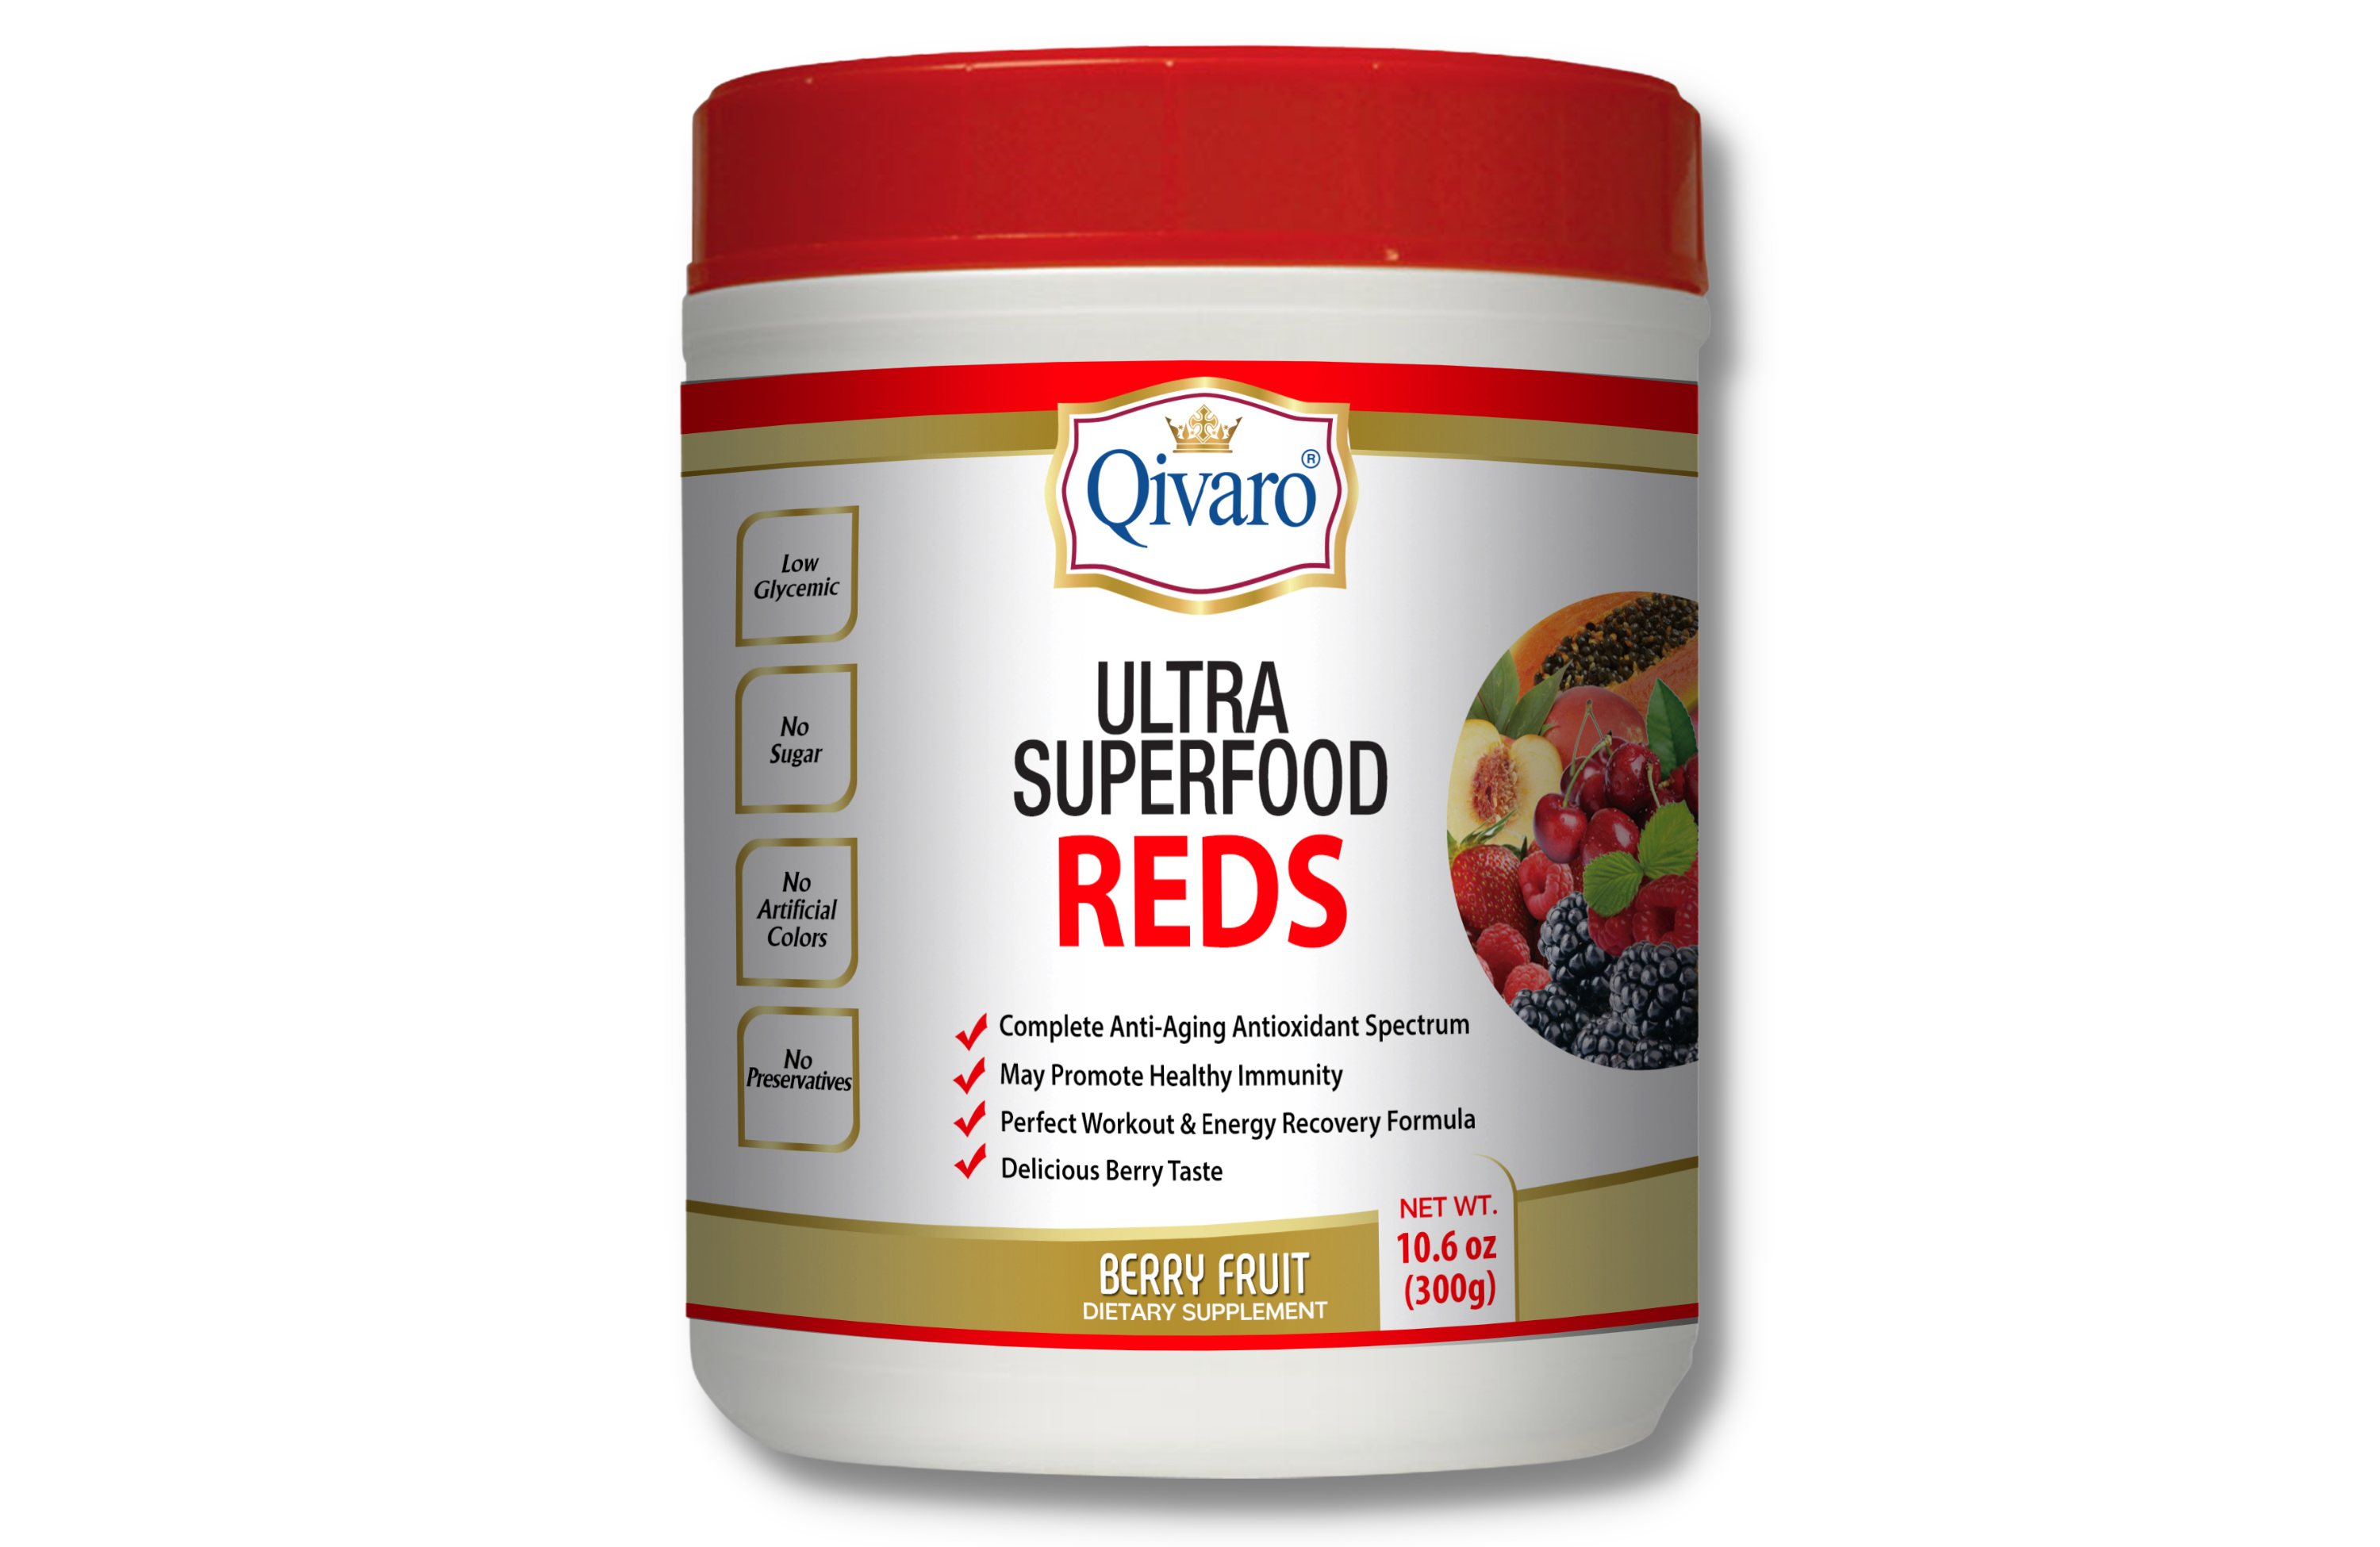 QIVP03 - Ultra Superfood Reds